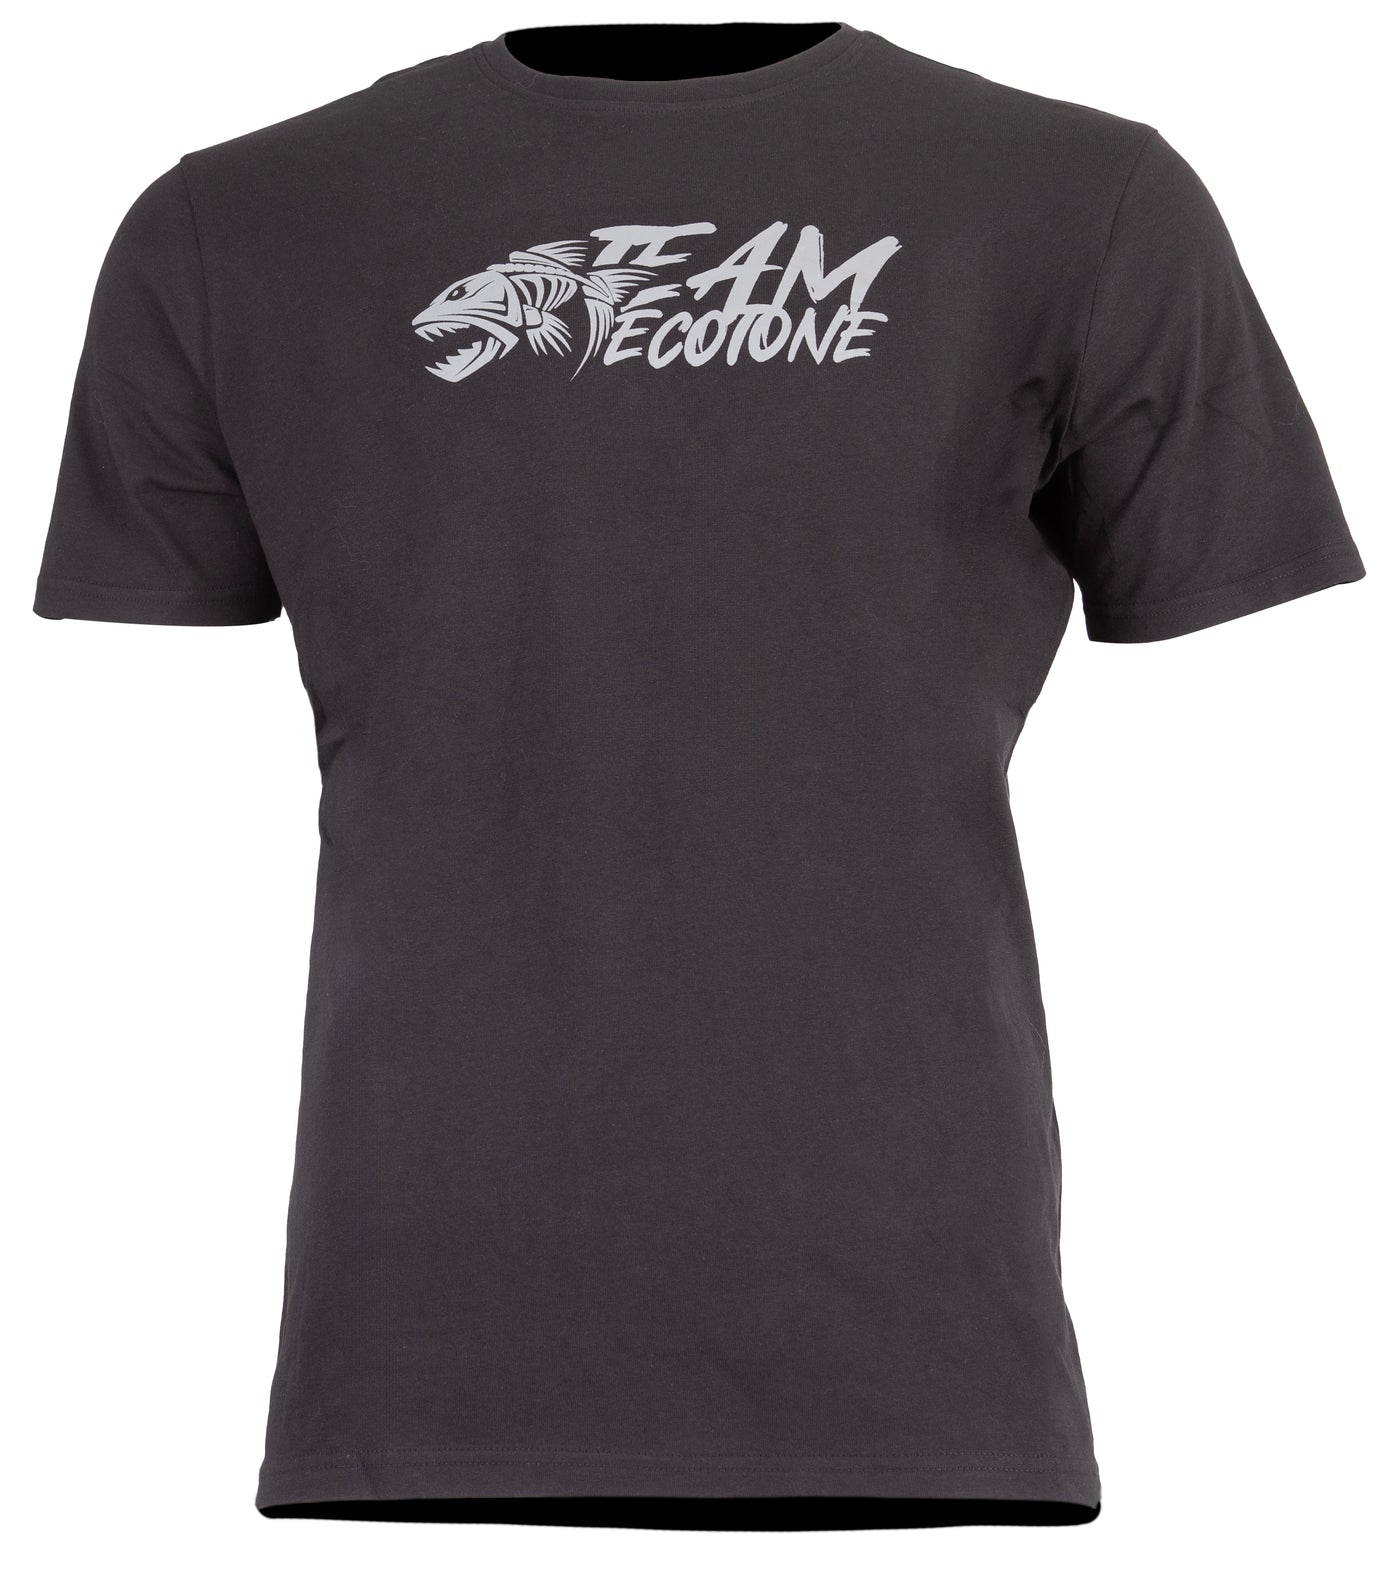 Men's short-sleeved shirt "fish logo Ecotone" by ECOTONE